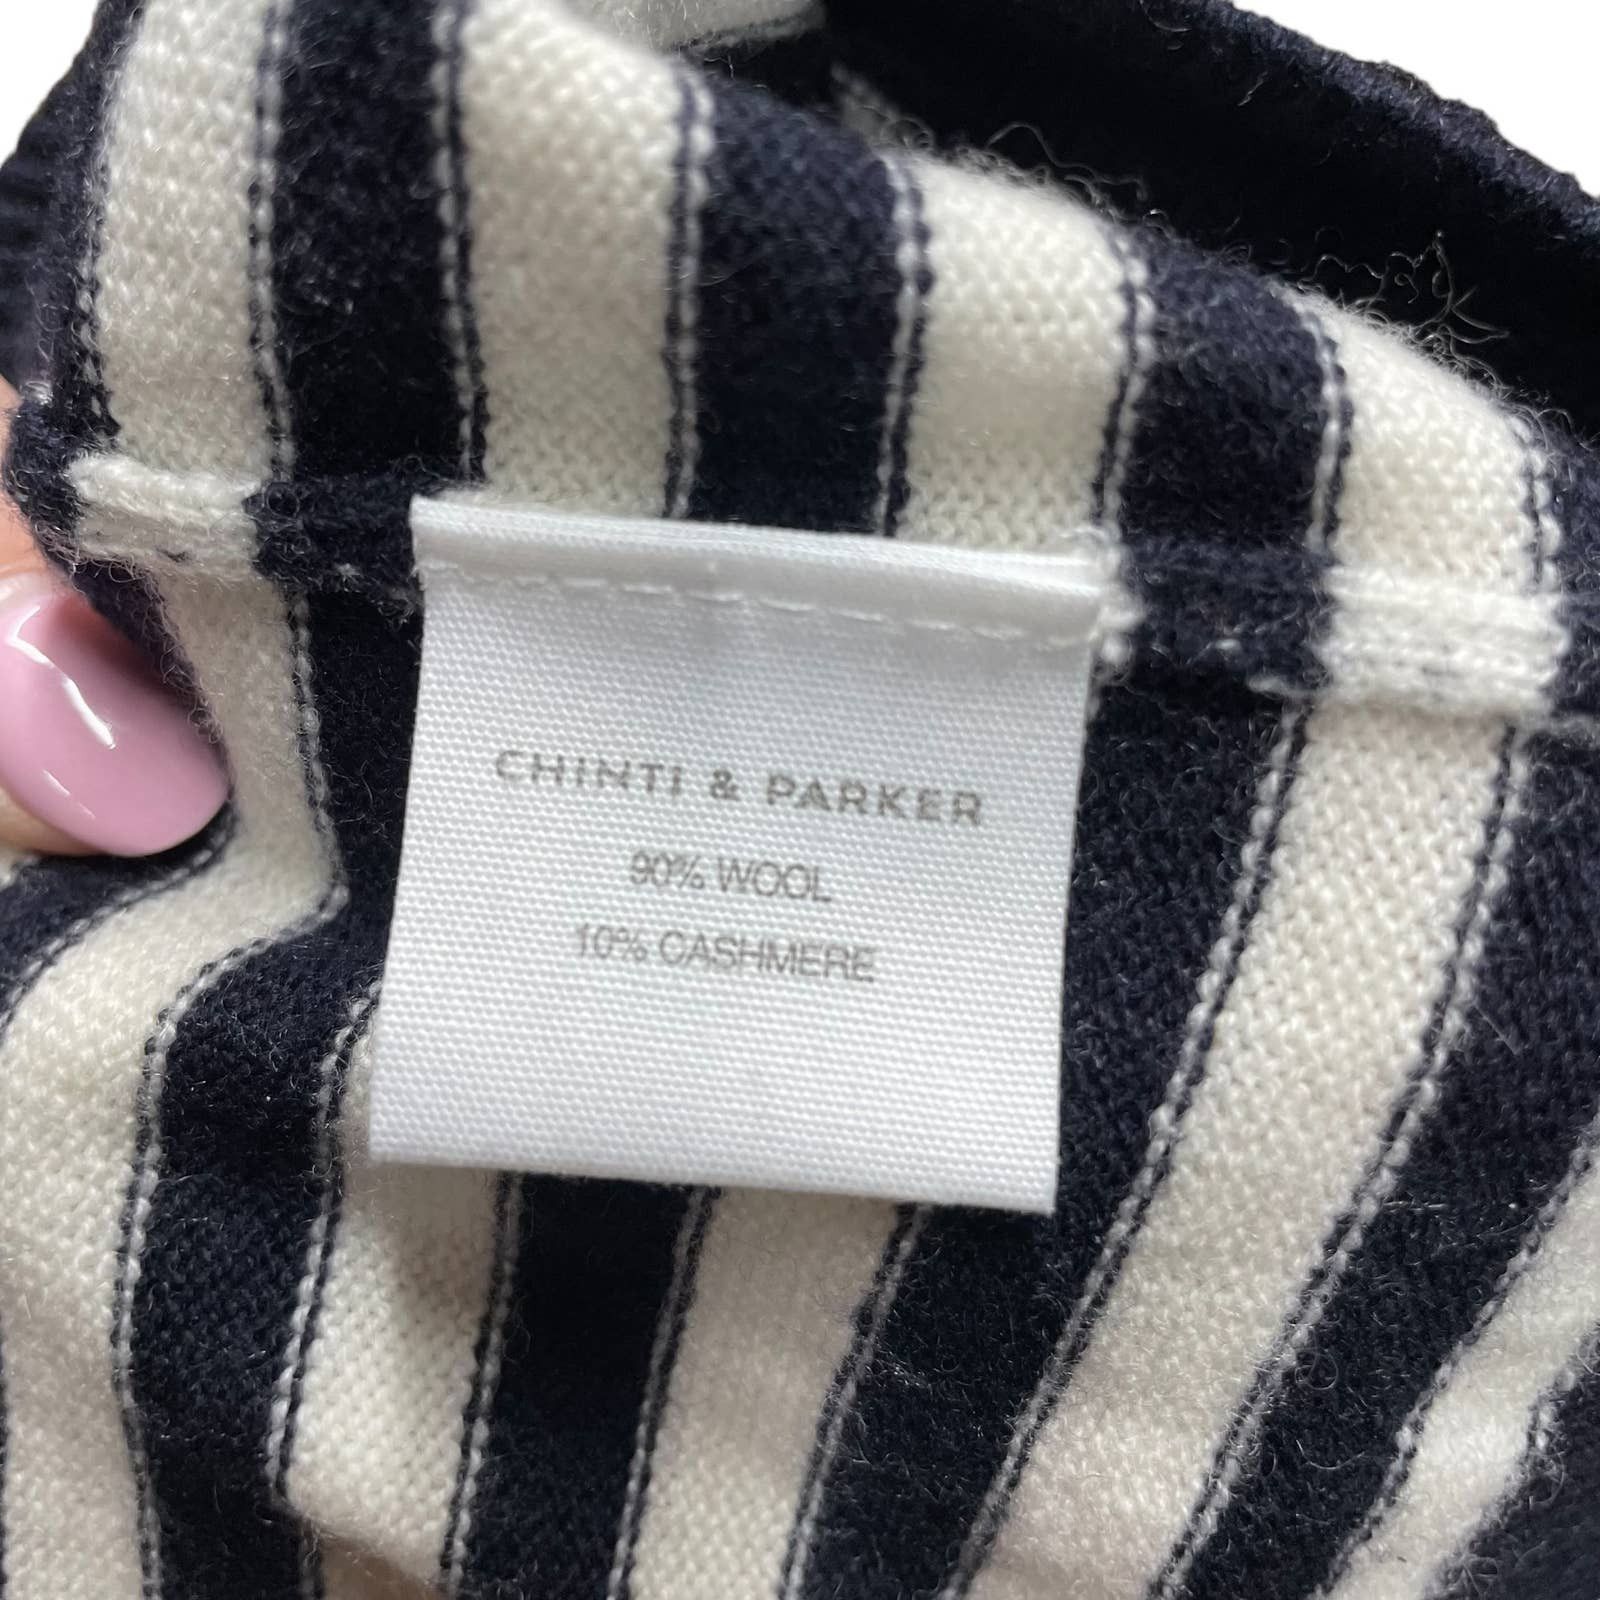 Chinti and Parker Chinti & Parker Navy Blue Cream Stripe Wool Cashmere Sweater Size M / US 6-8 / IT 42-44 - 9 Thumbnail